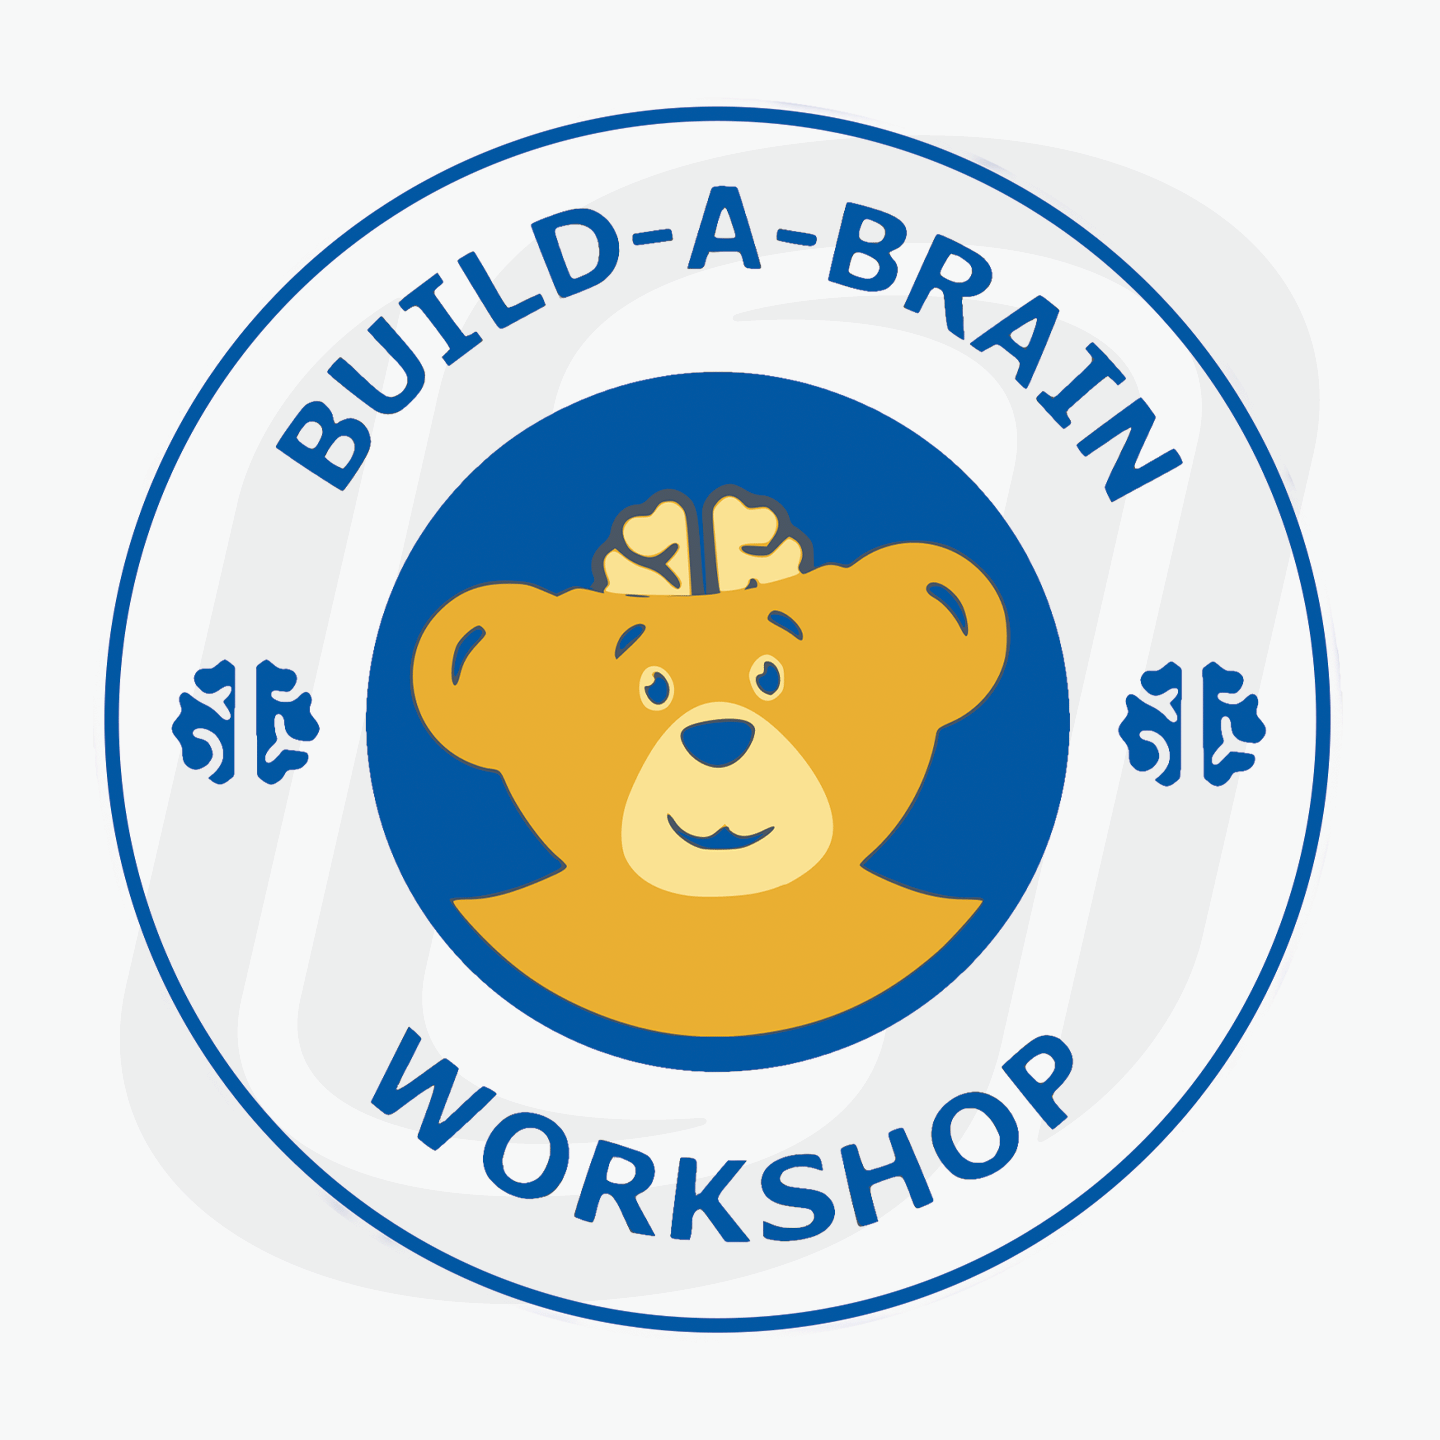 Build-a-Brain Workshop Logo